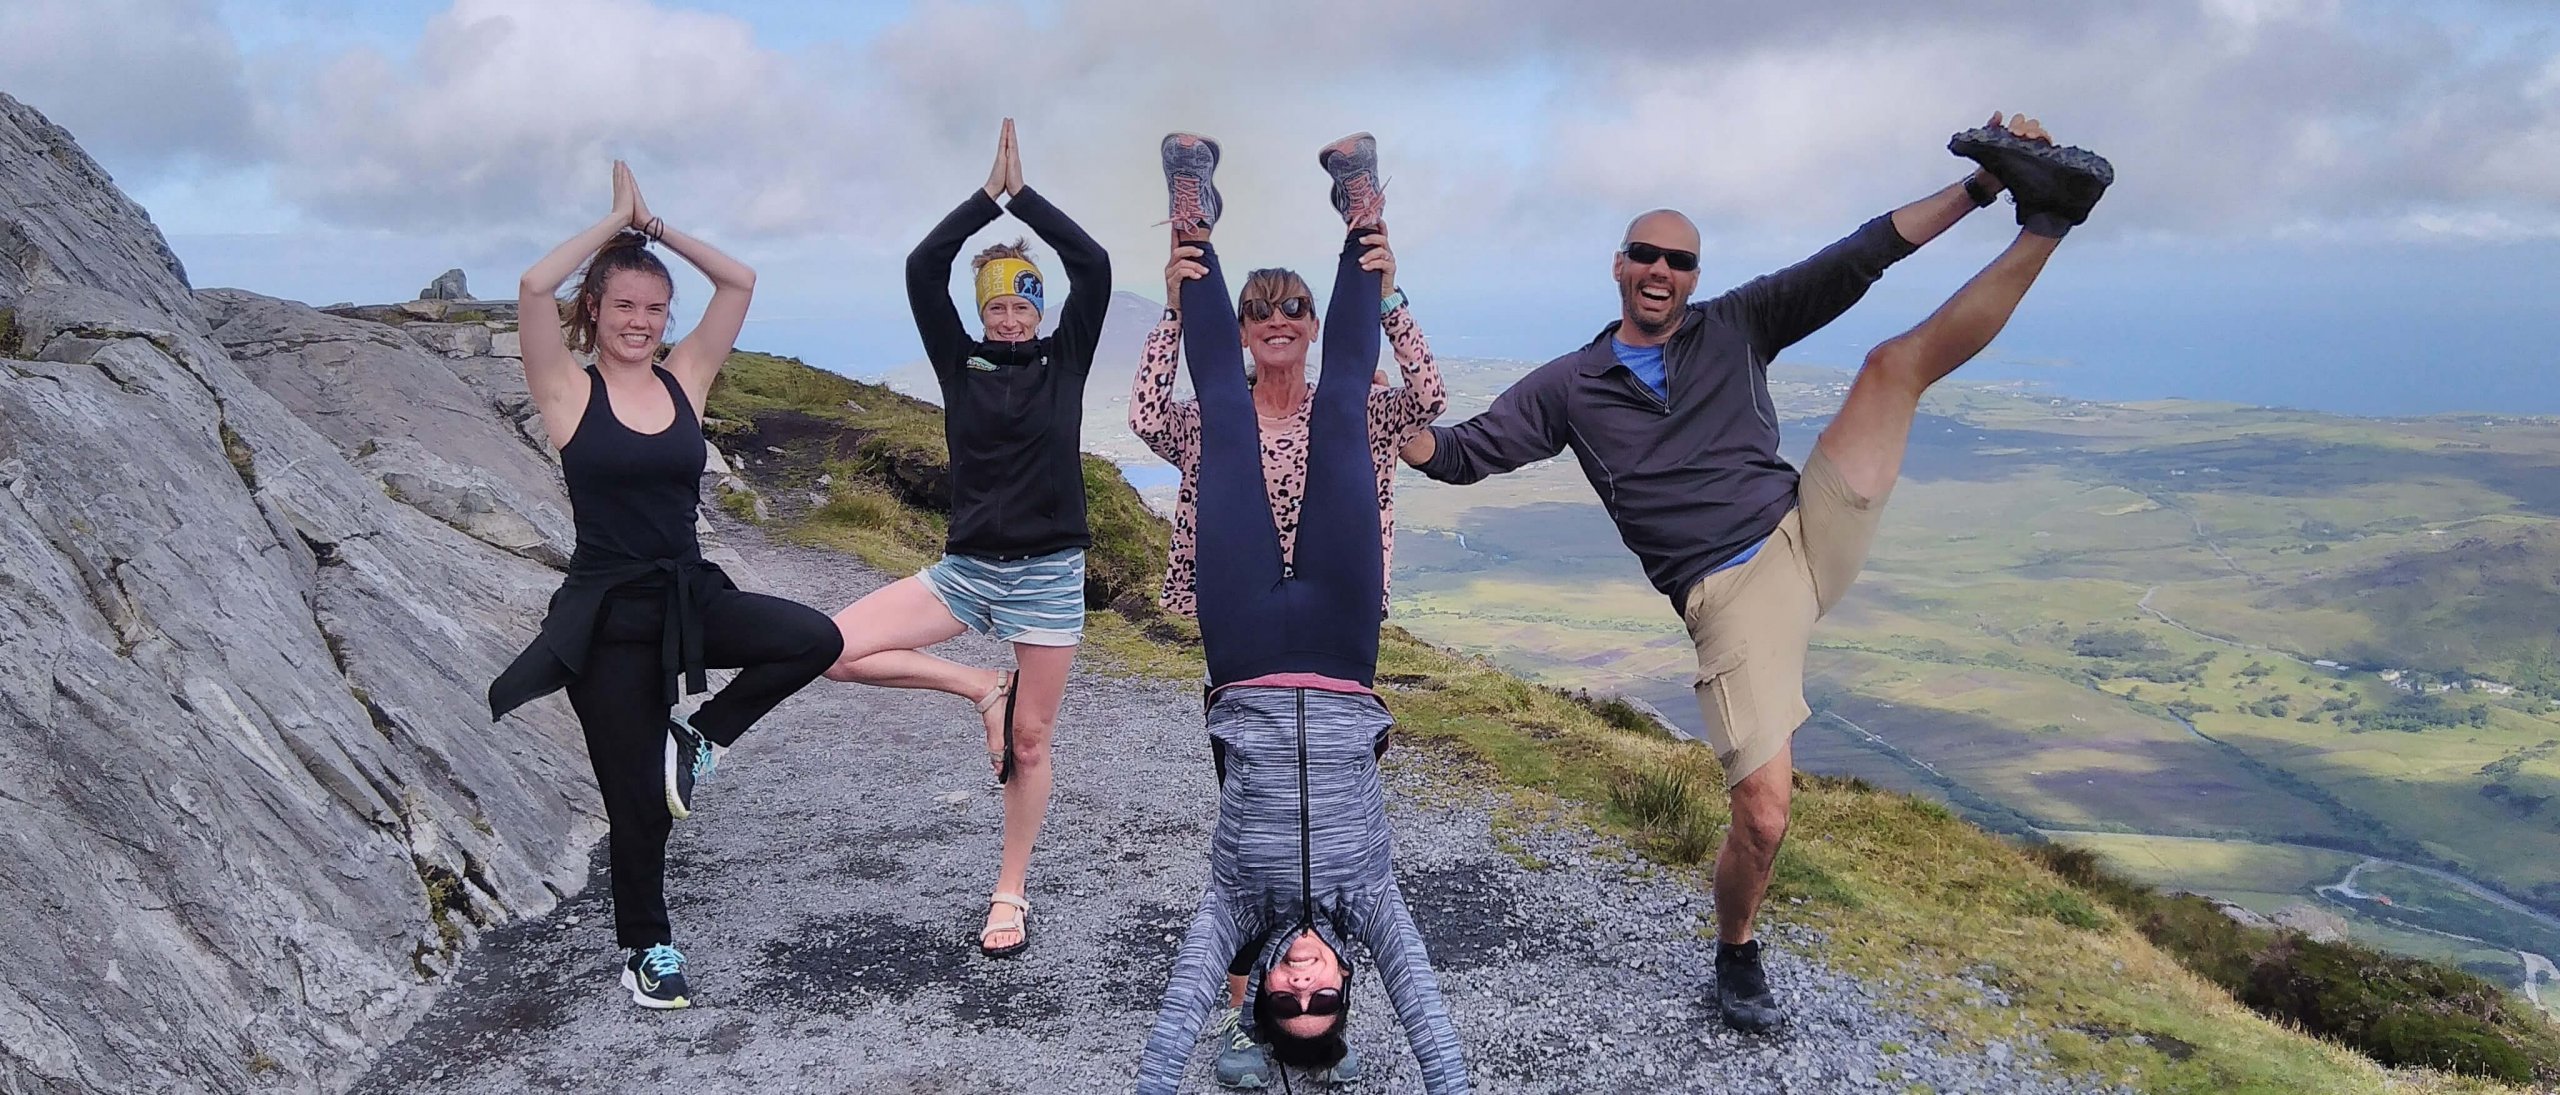 A tour group posing acrobatically on a mountain in Ireland